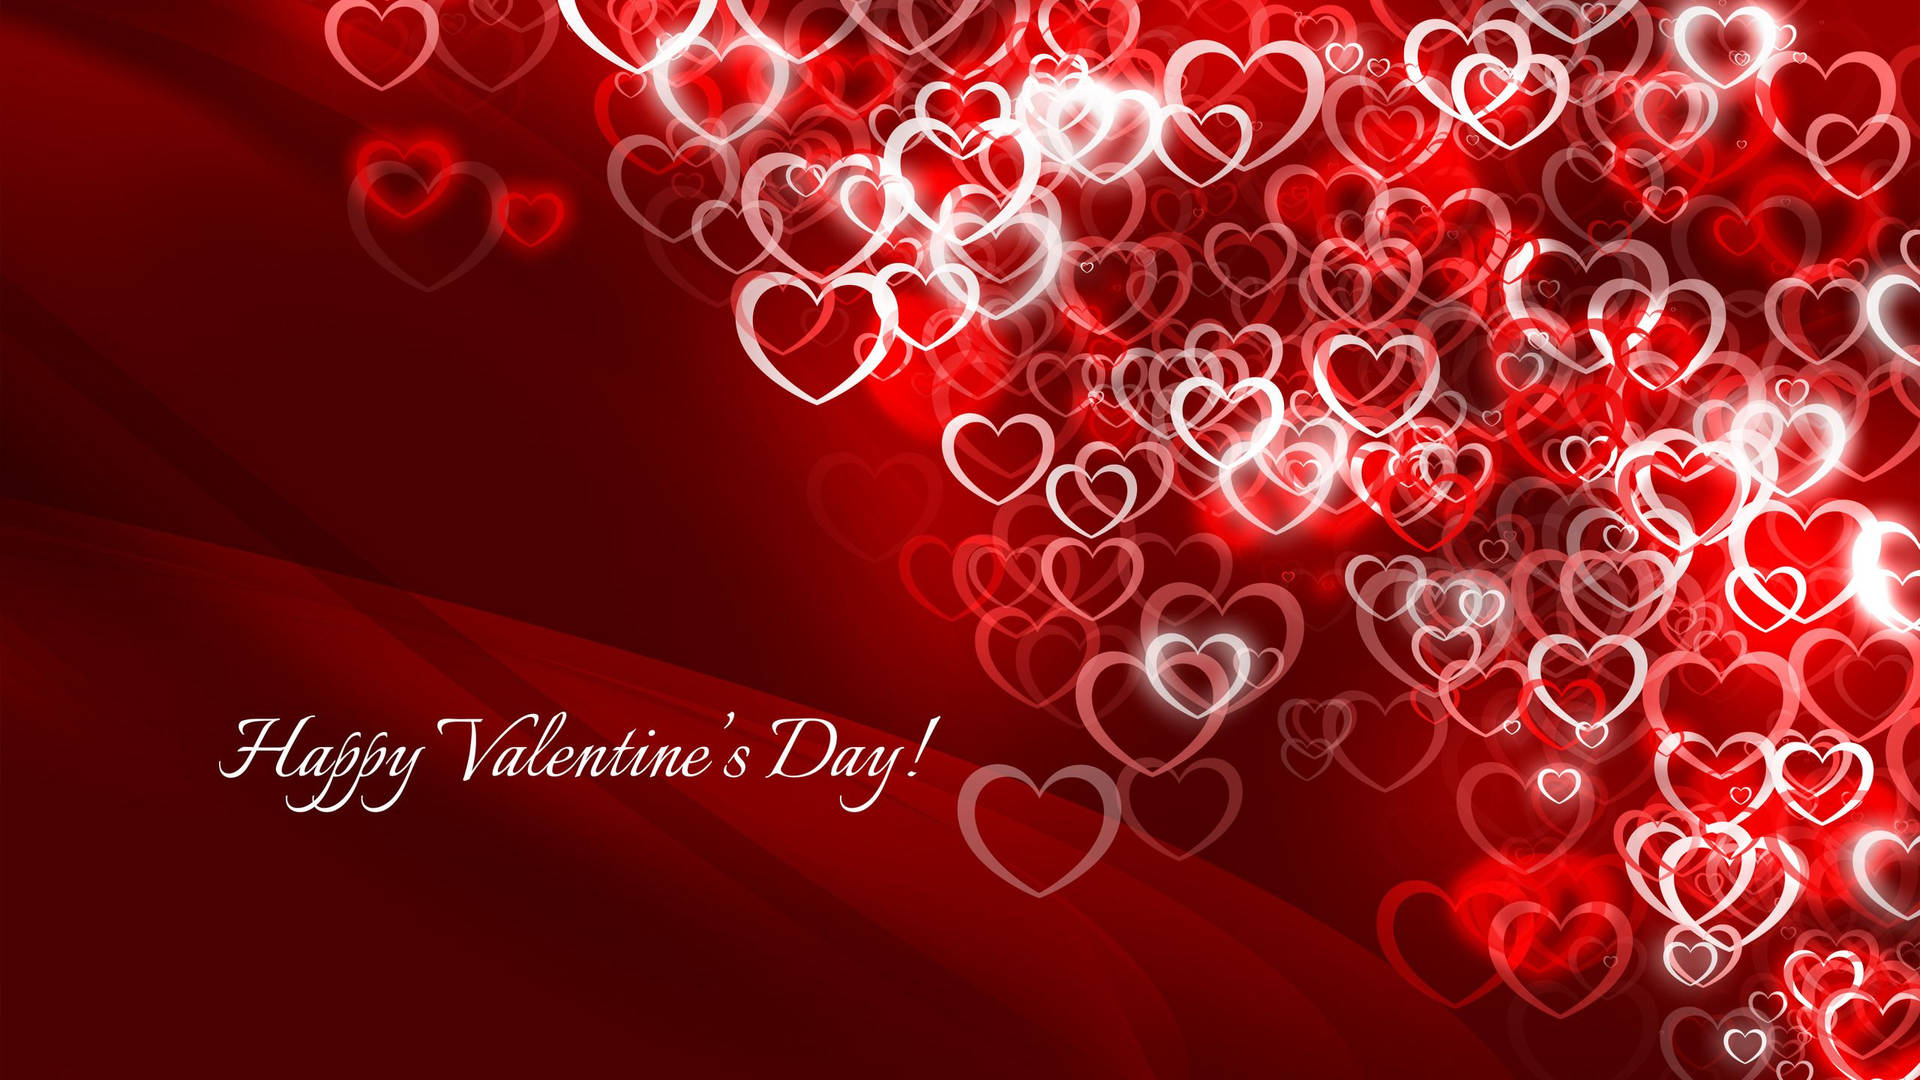 Crystalizing Valentine's Hearts Desktop Background